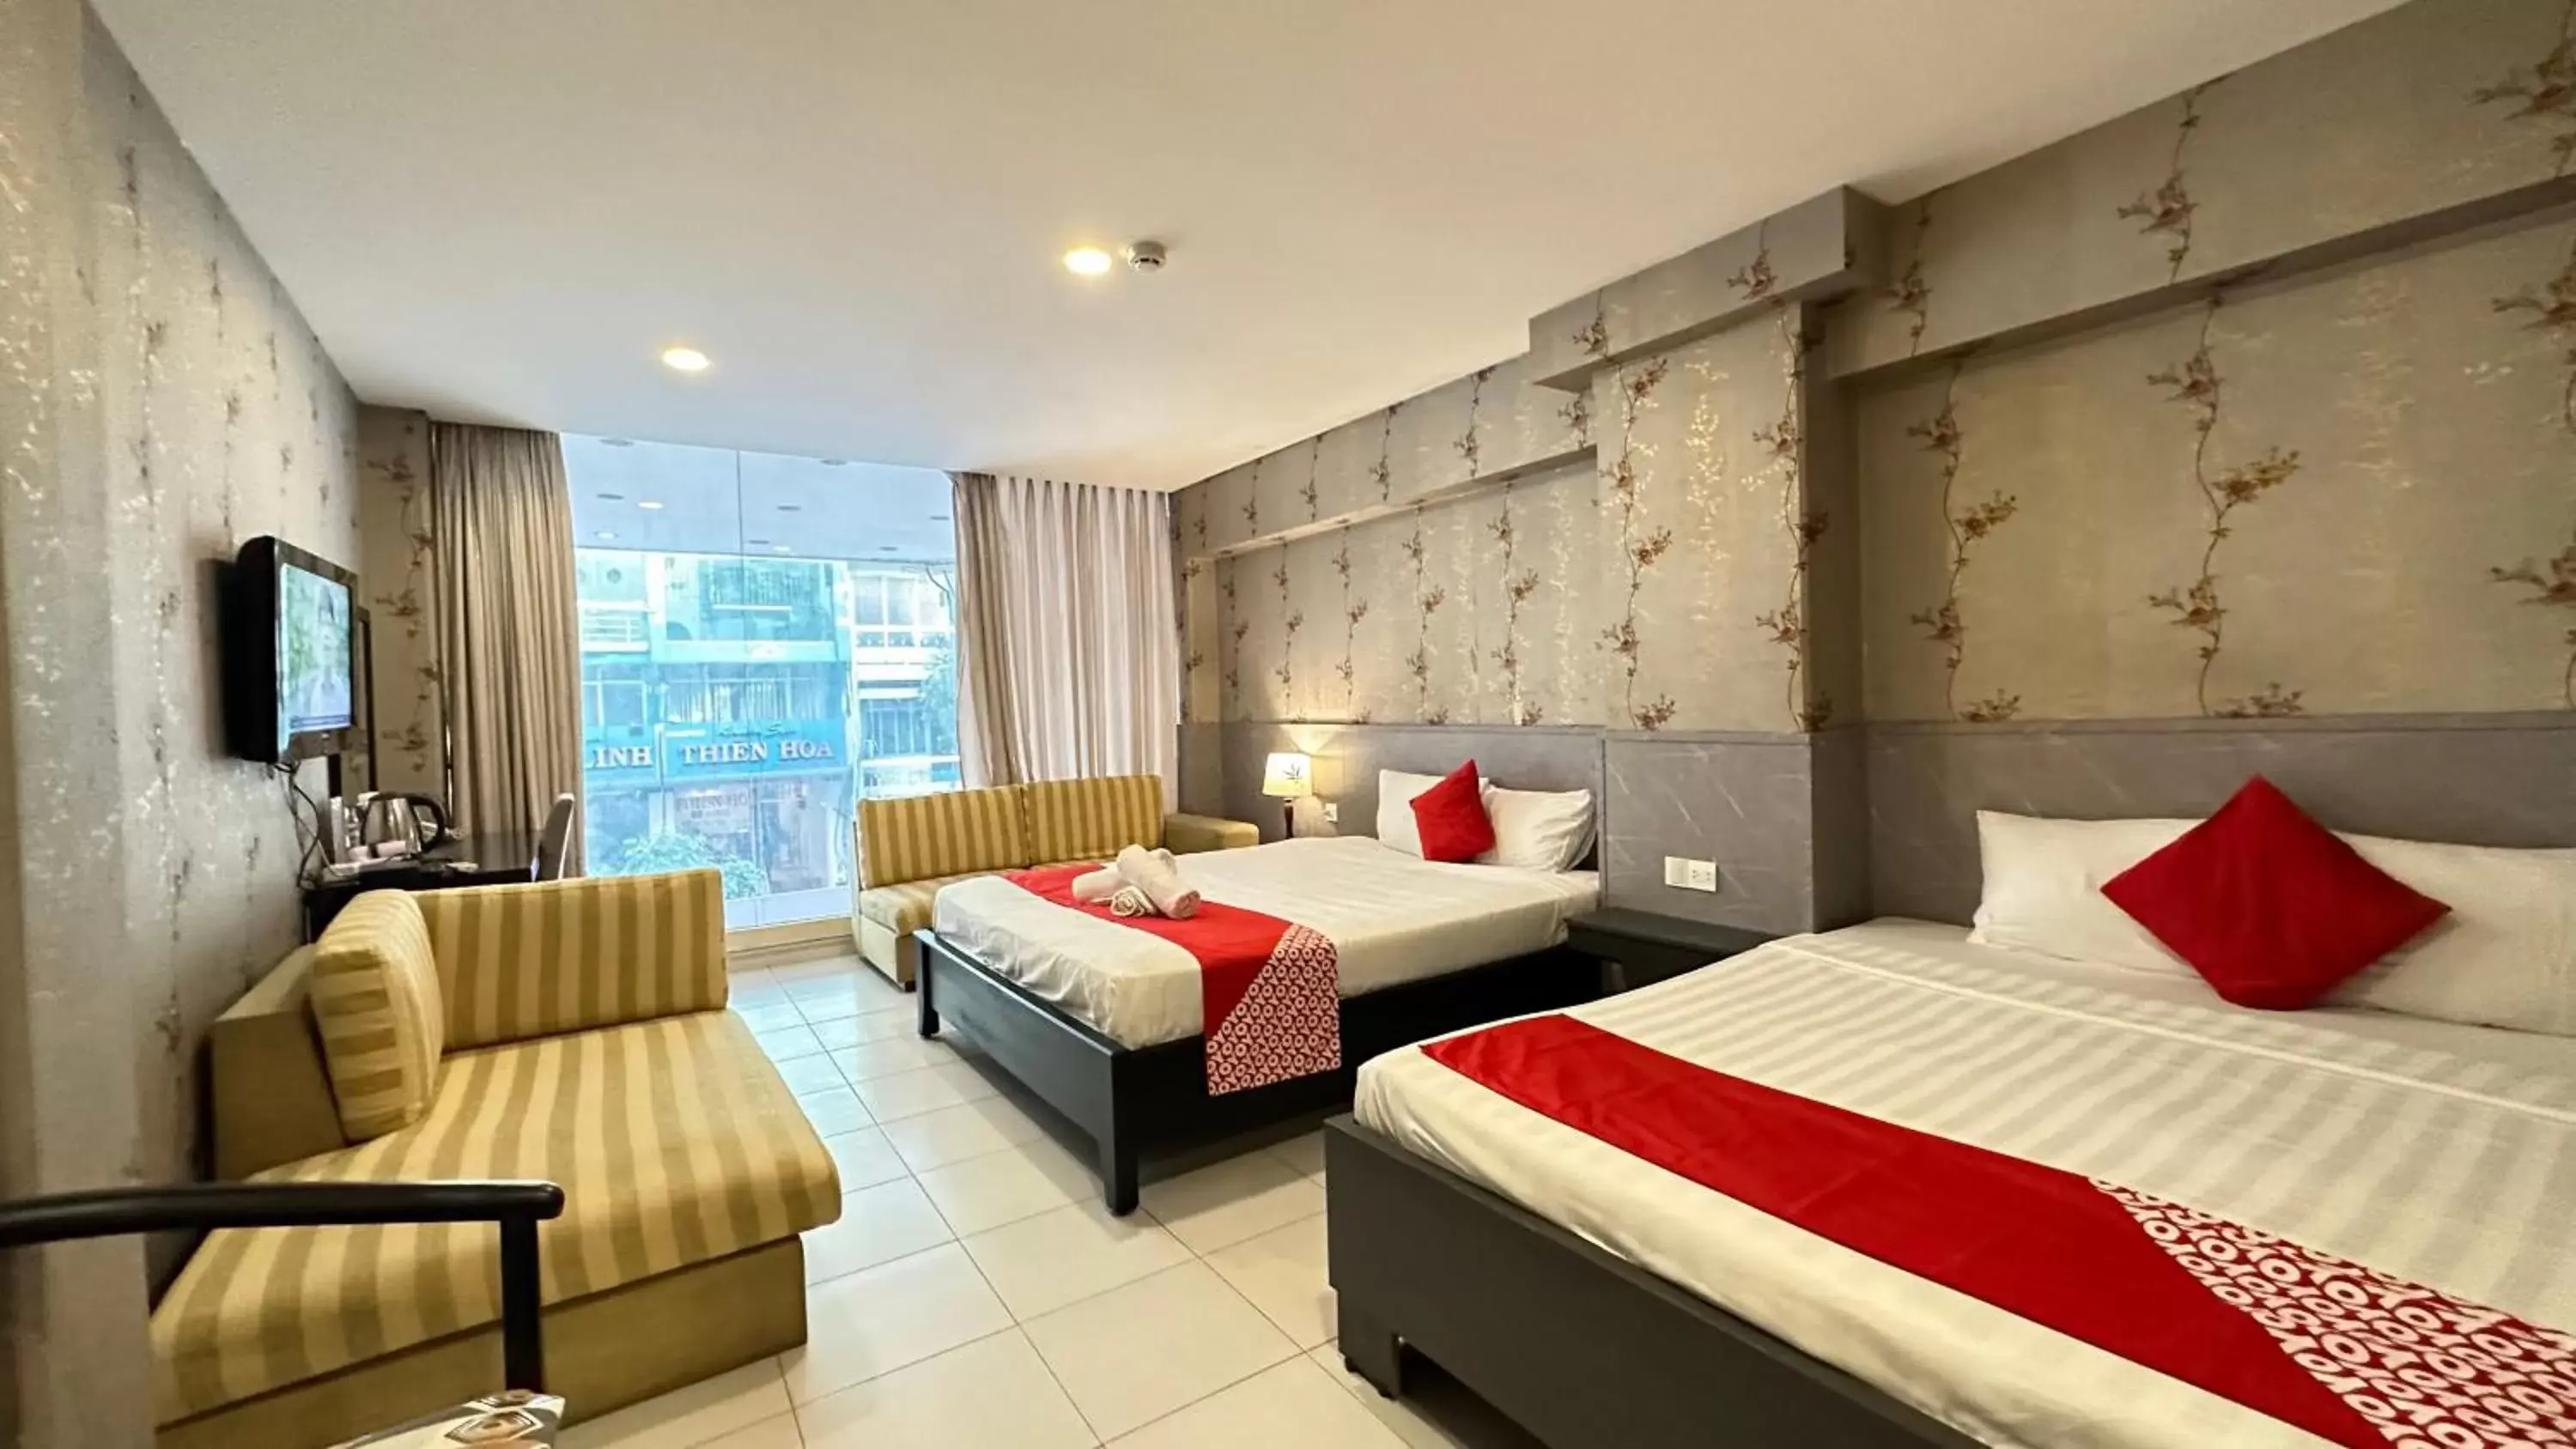 Photo of the whole room in Centara Saigon Hotel